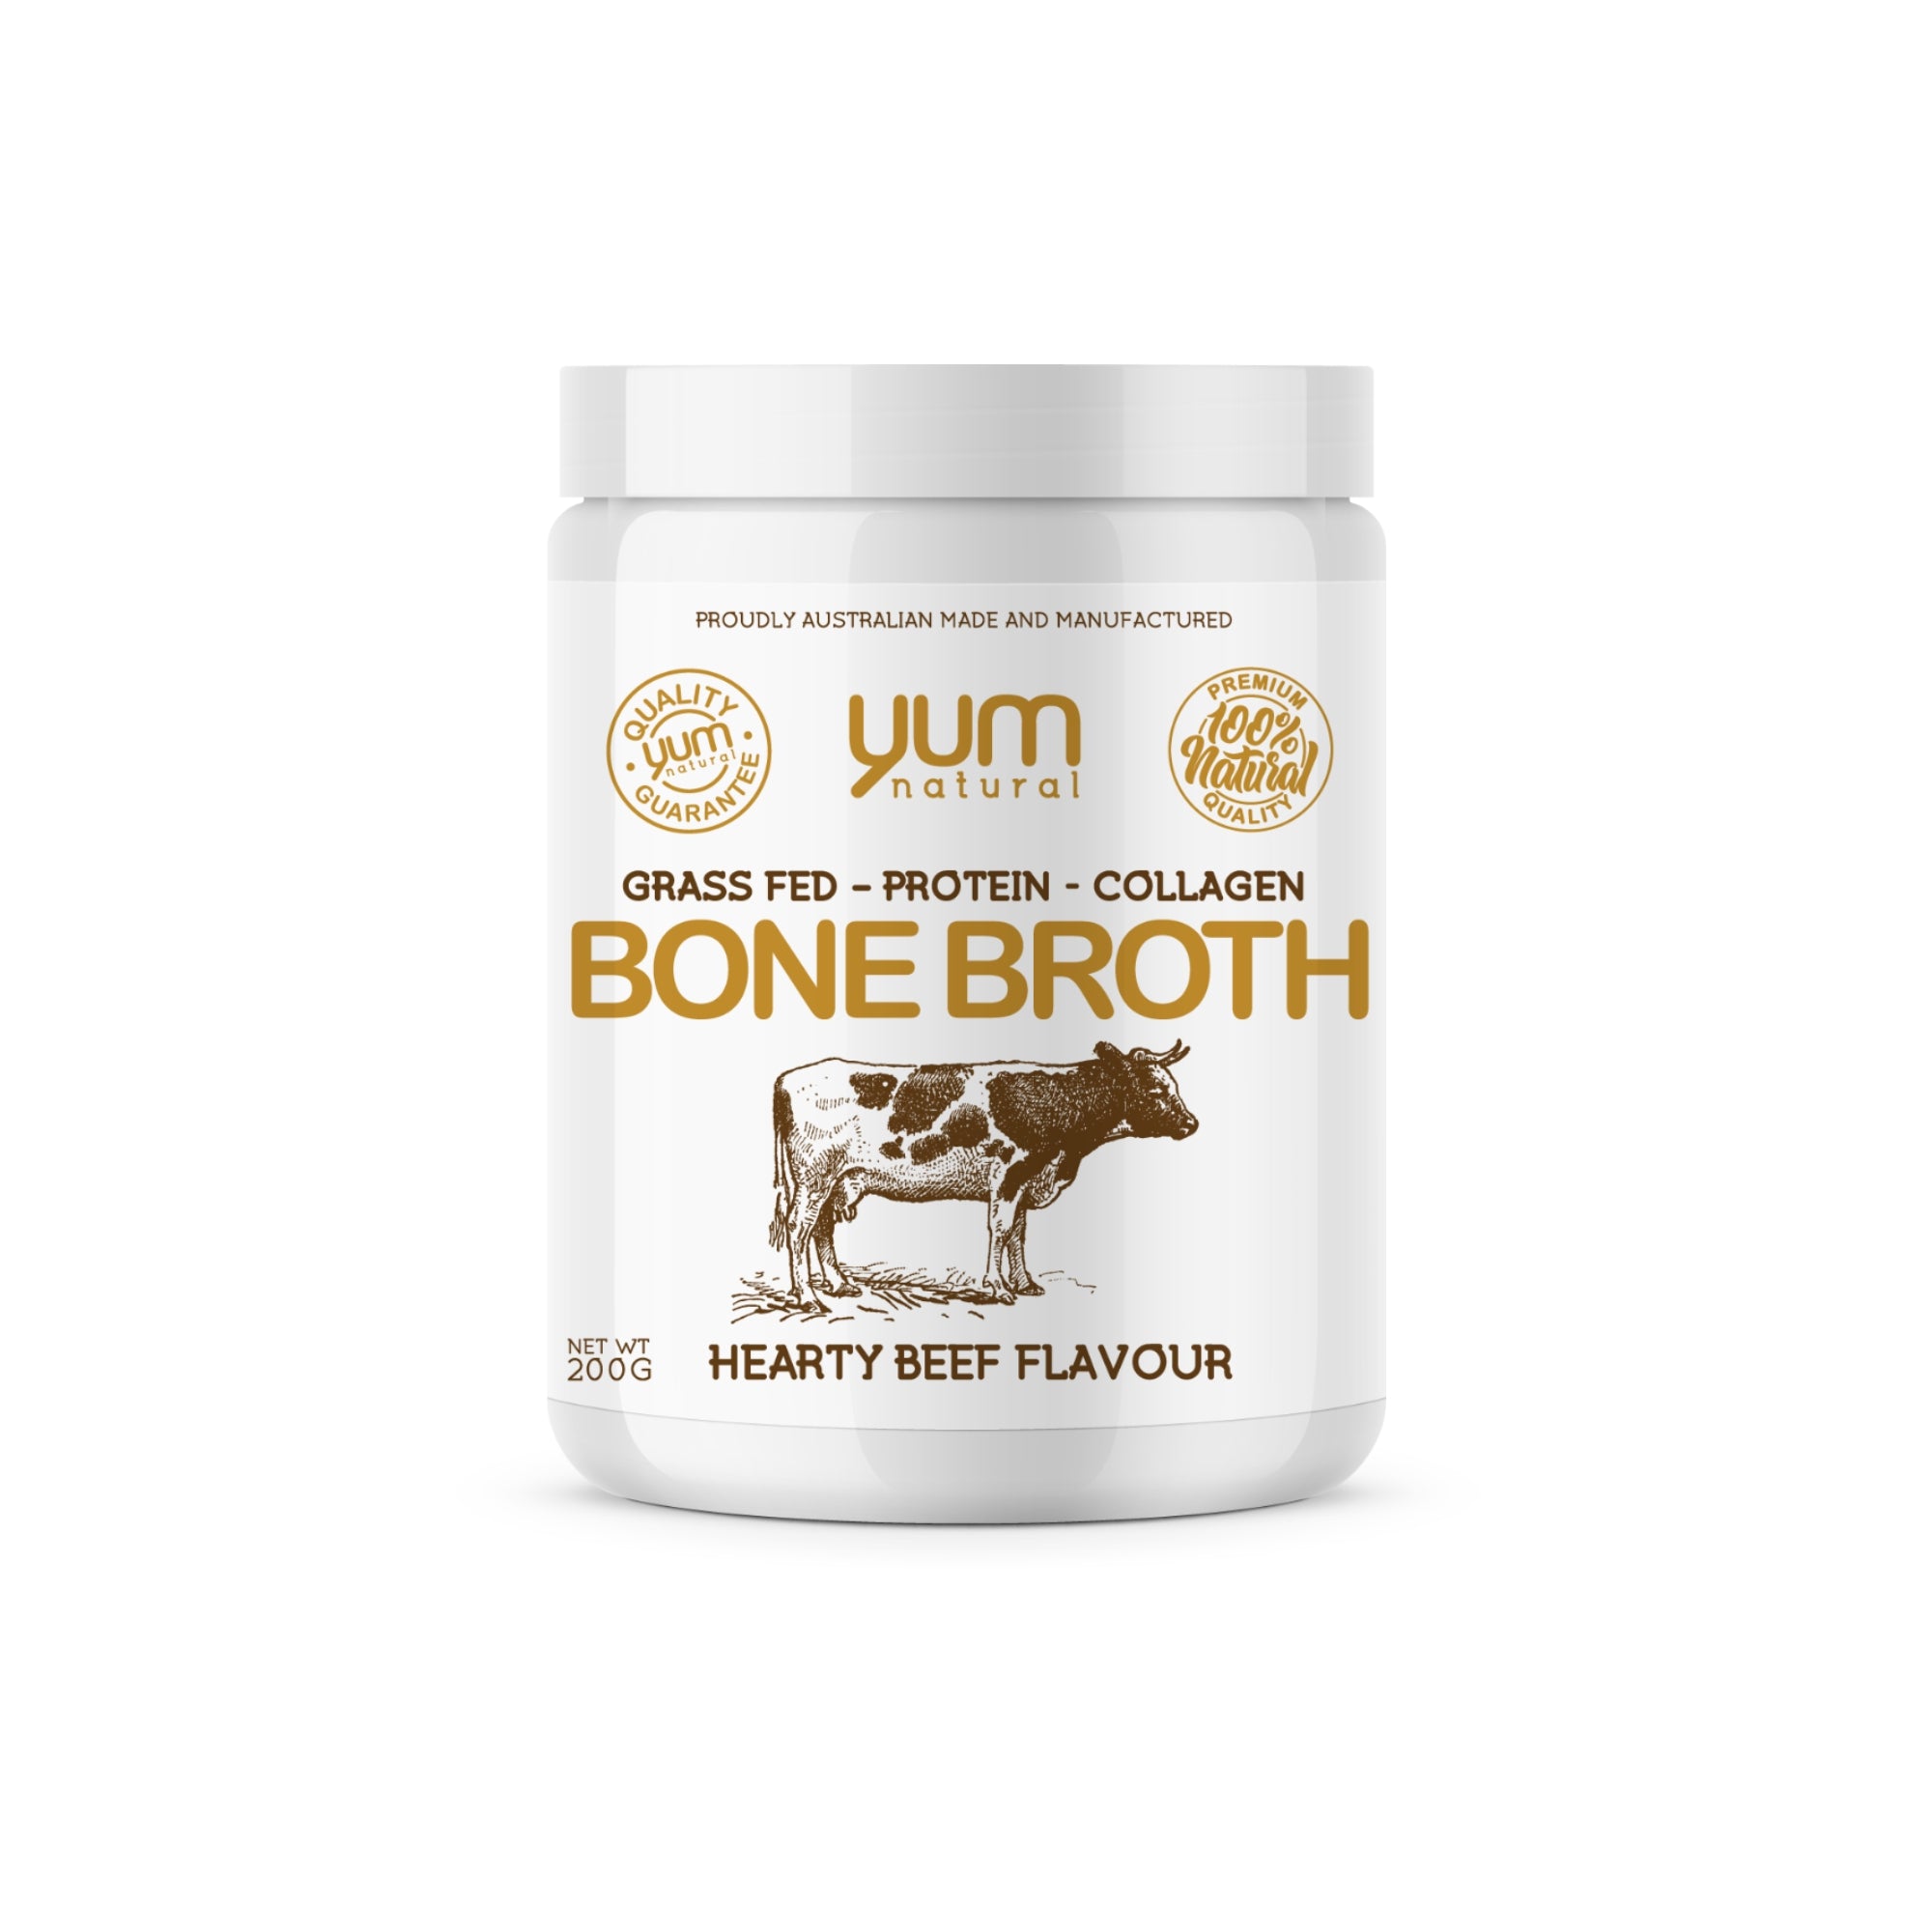 Yum Bone Broth